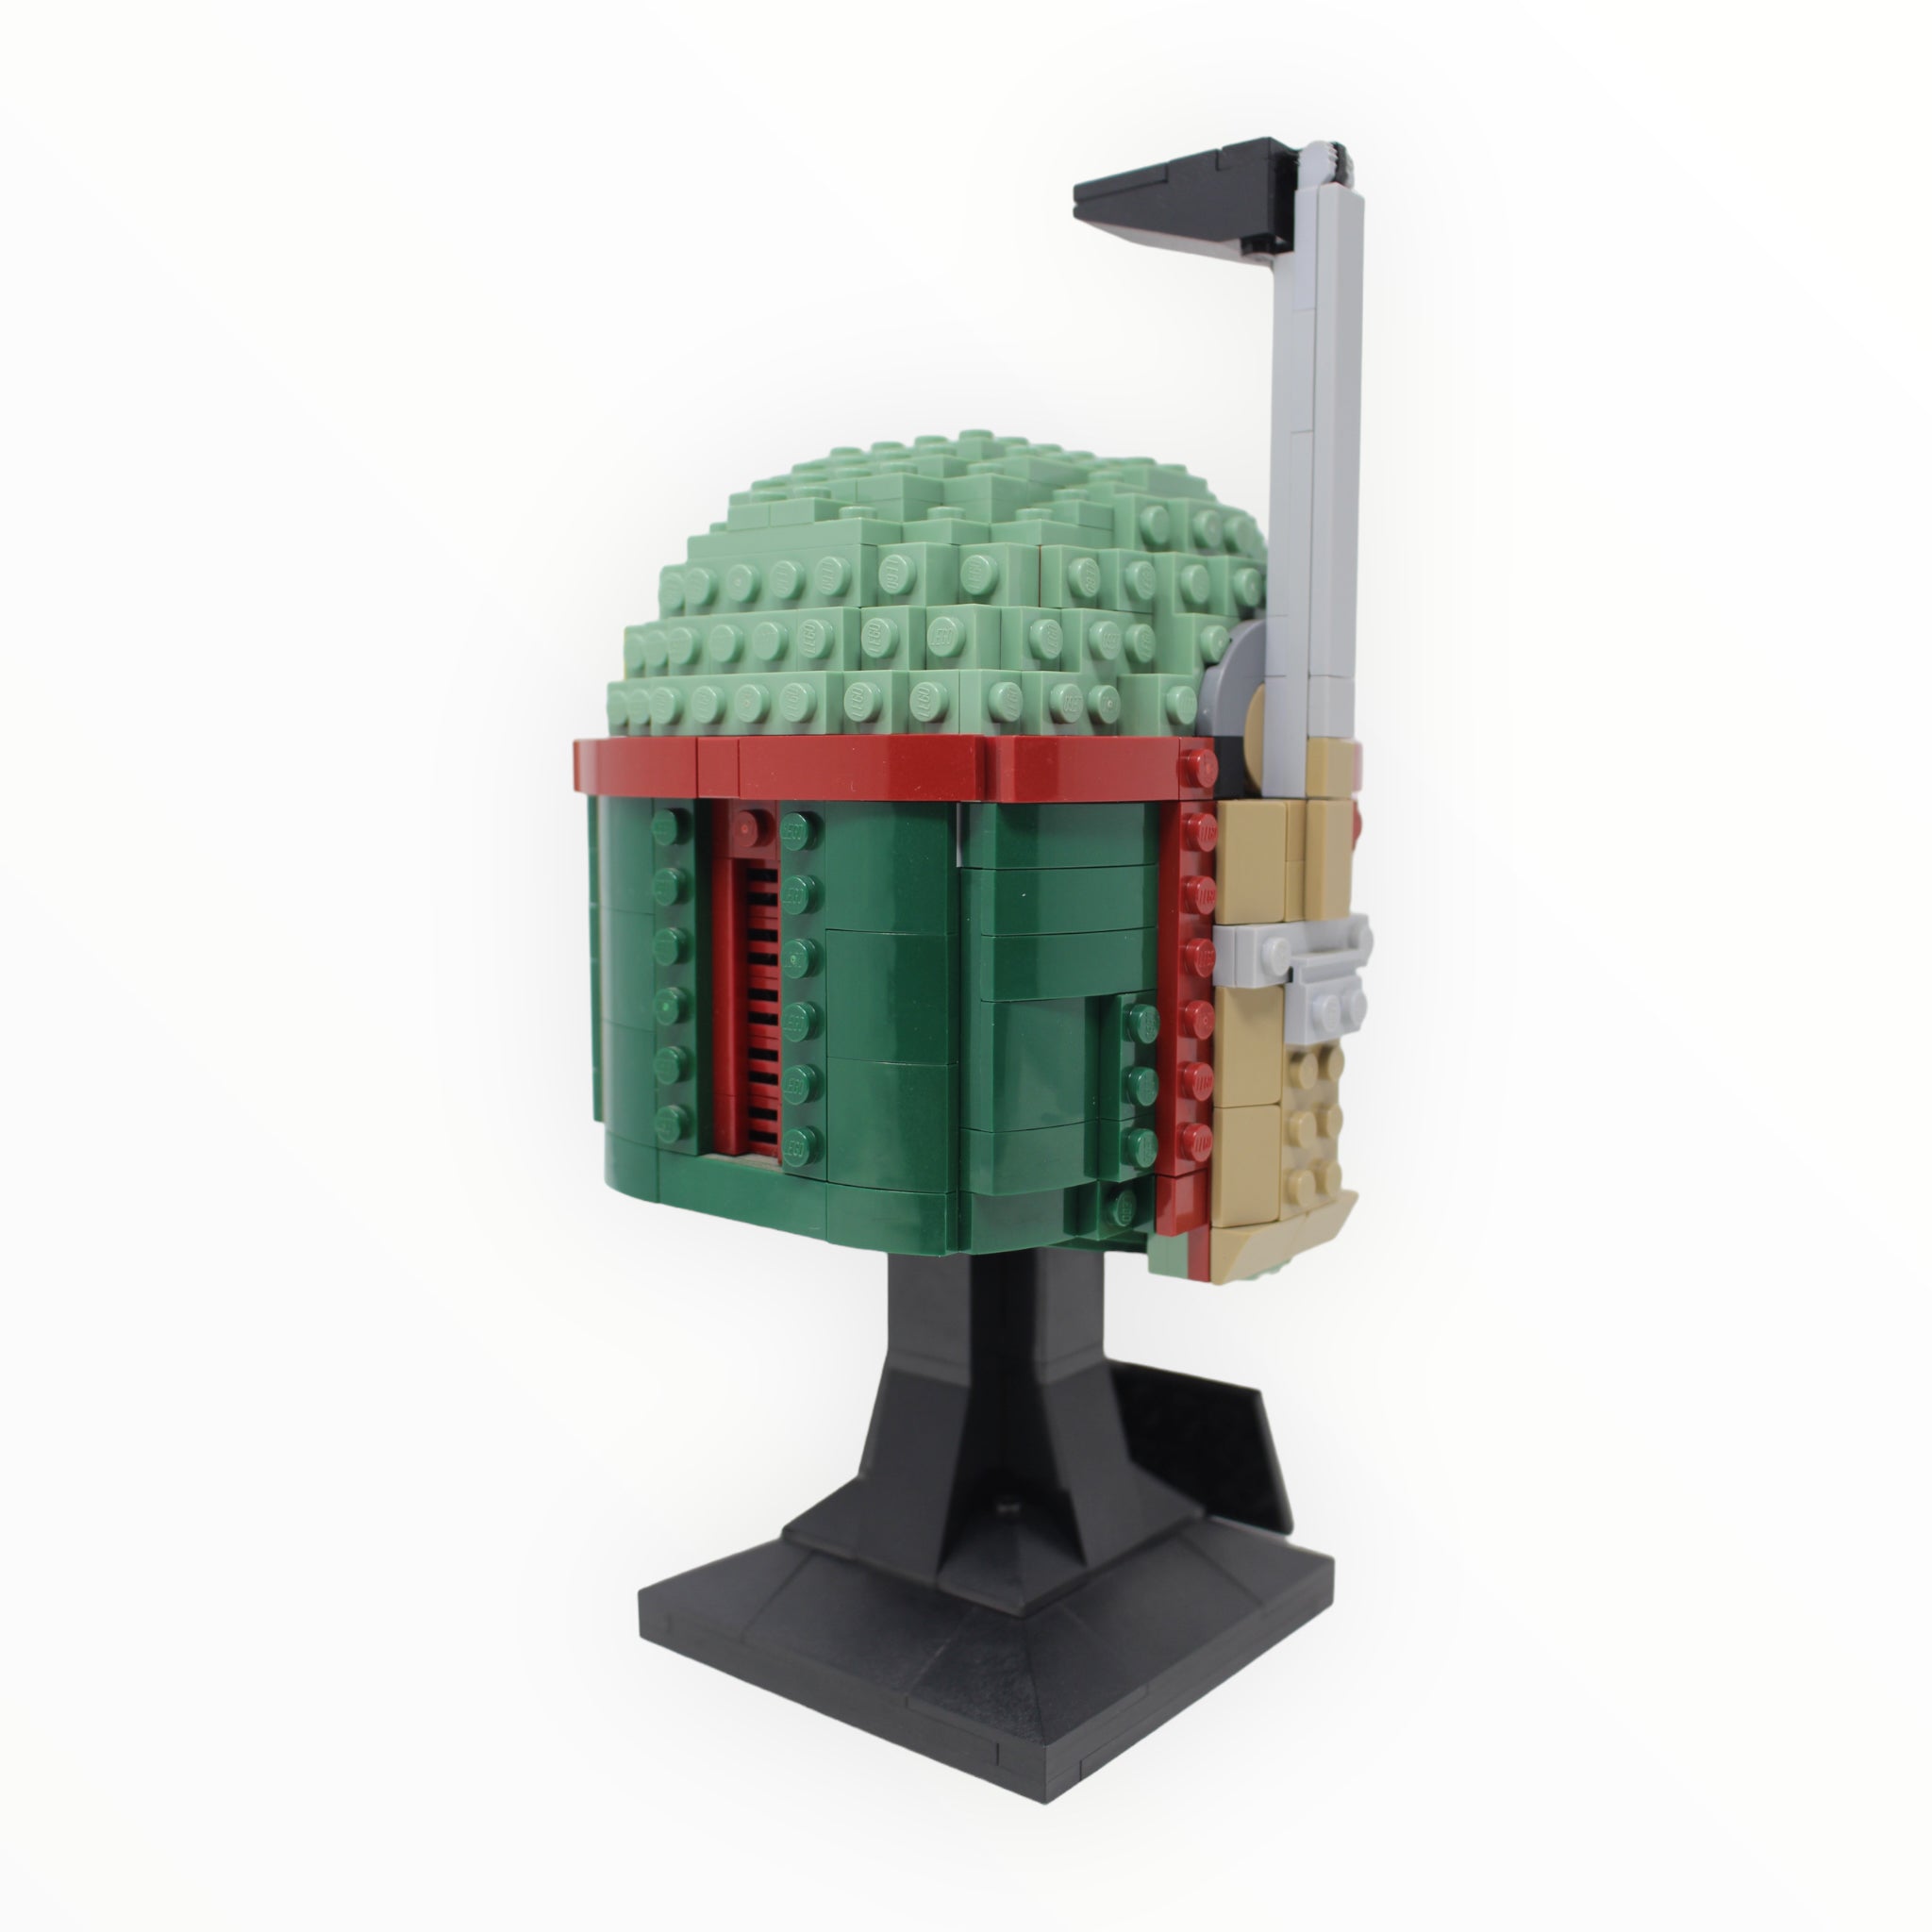 LEGO 75277 Star Wars Helmet Collection Boba Fett